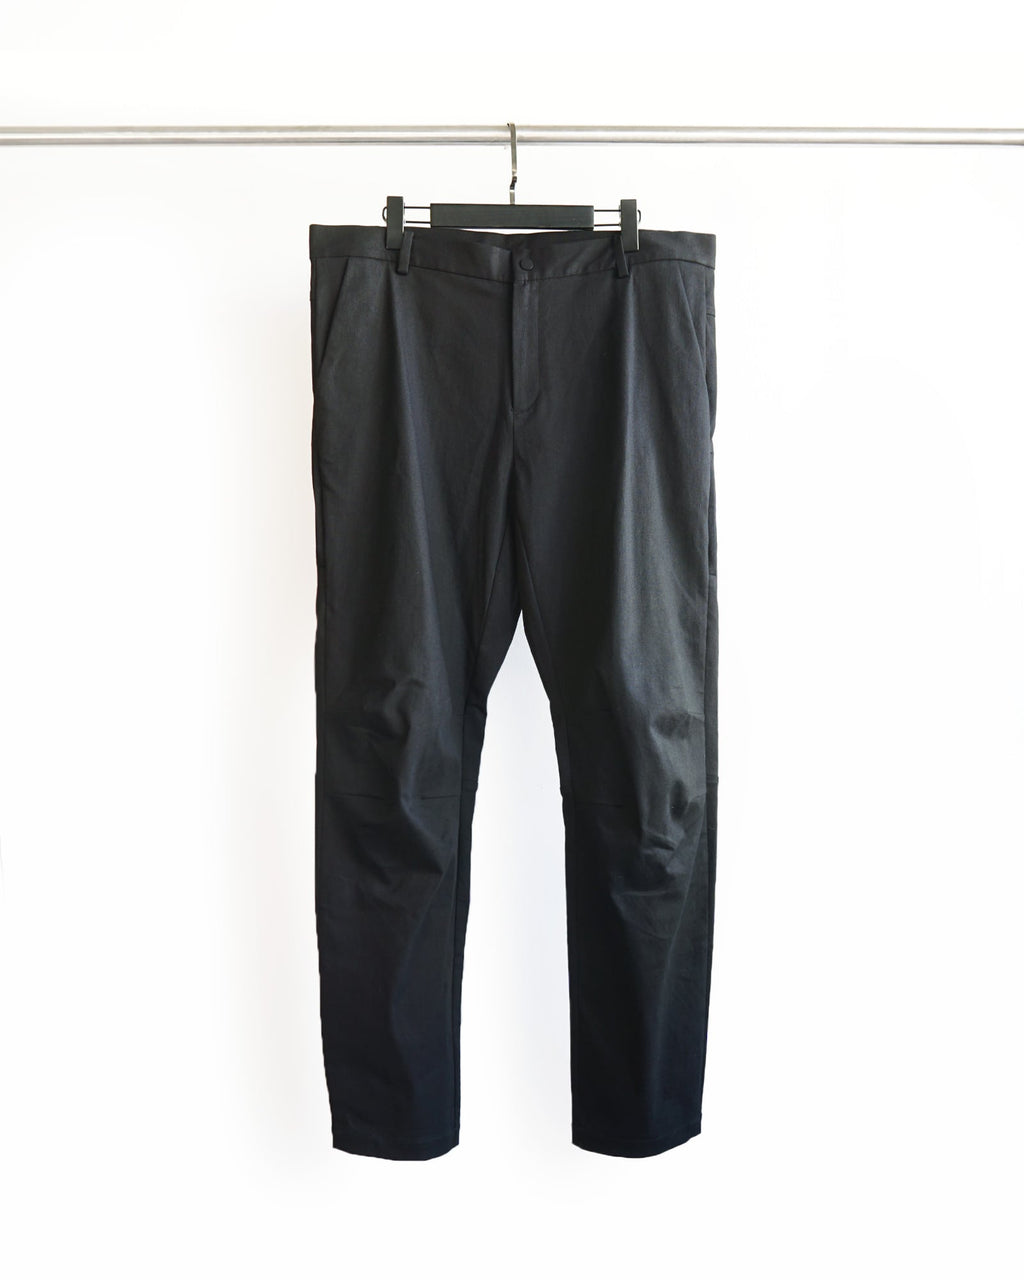 ROSEN-X Hiten Articulated Trousers in Cotton Sz 4-5